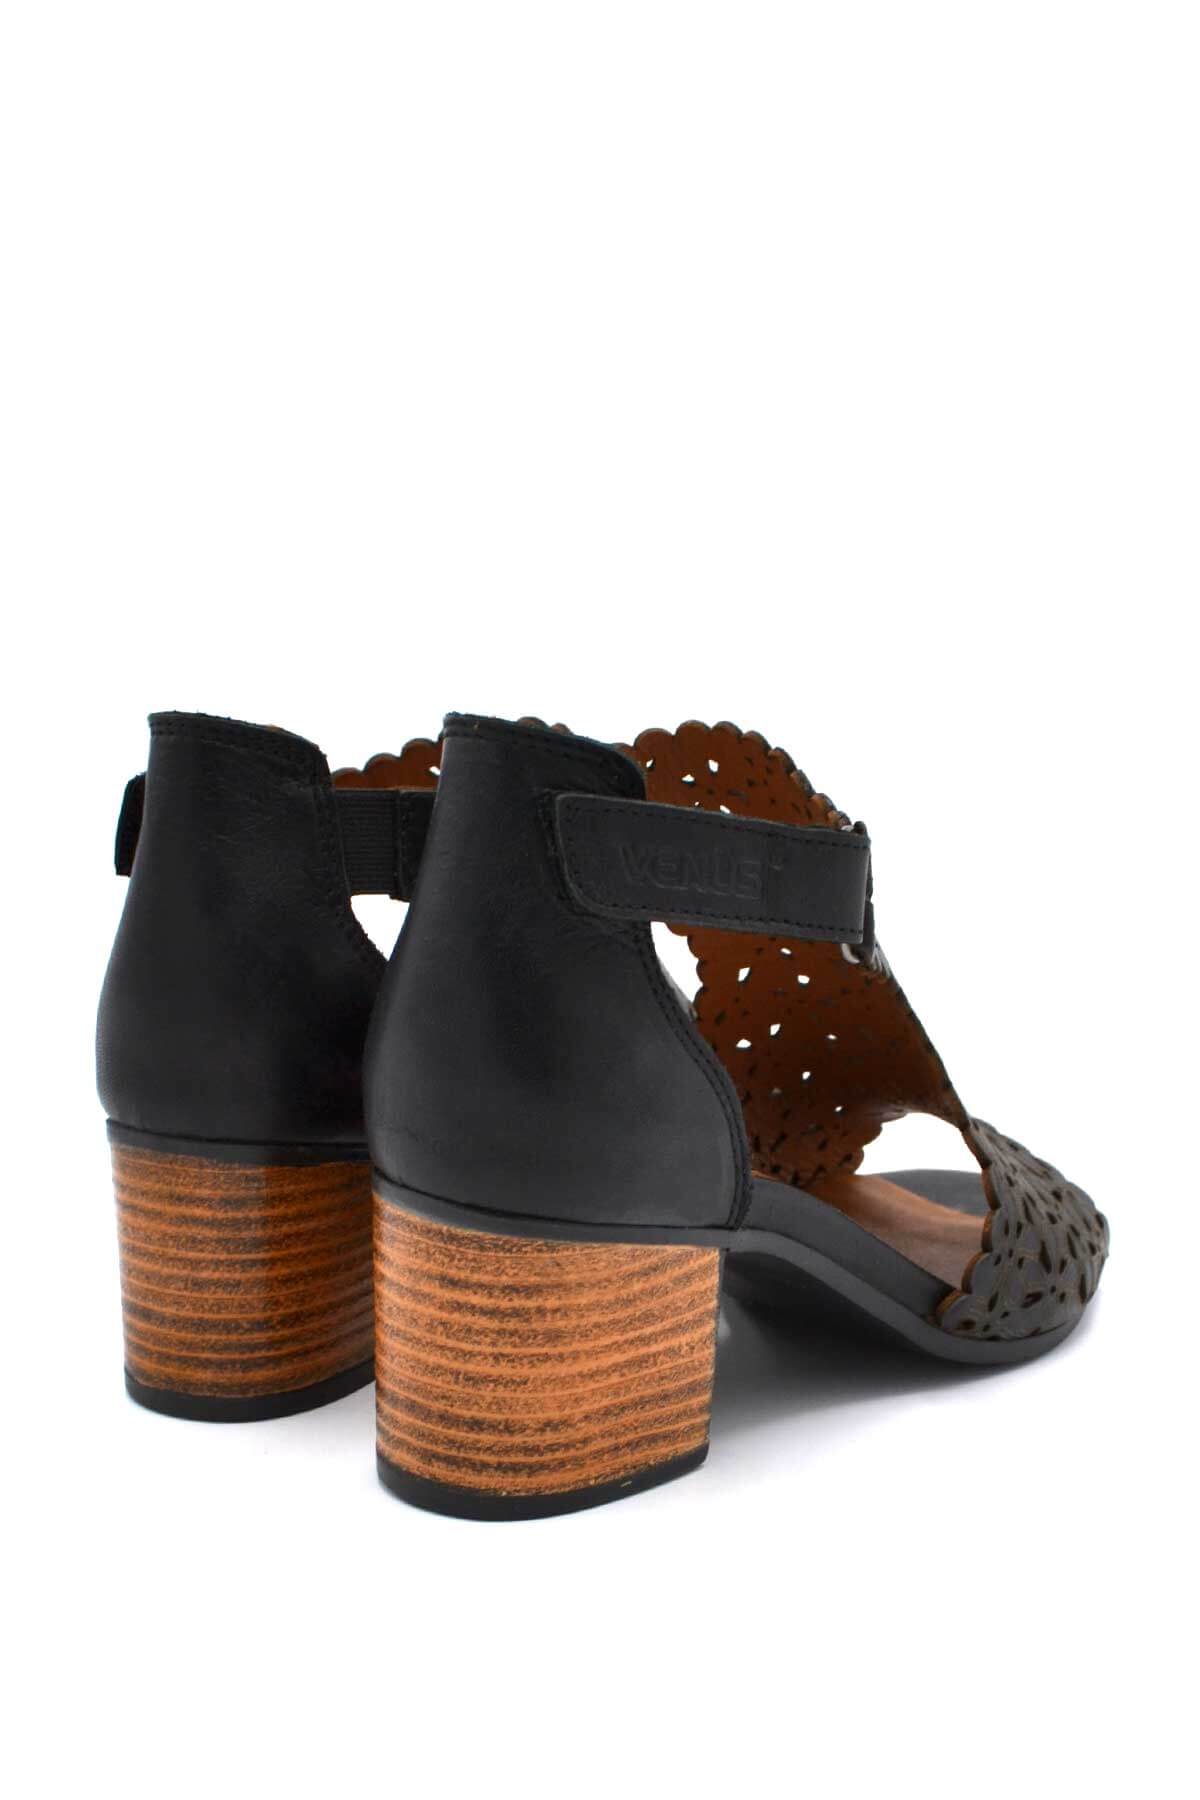 Kadın Topuklu Deri Sandalet Siyah 1857215Y - Thumbnail